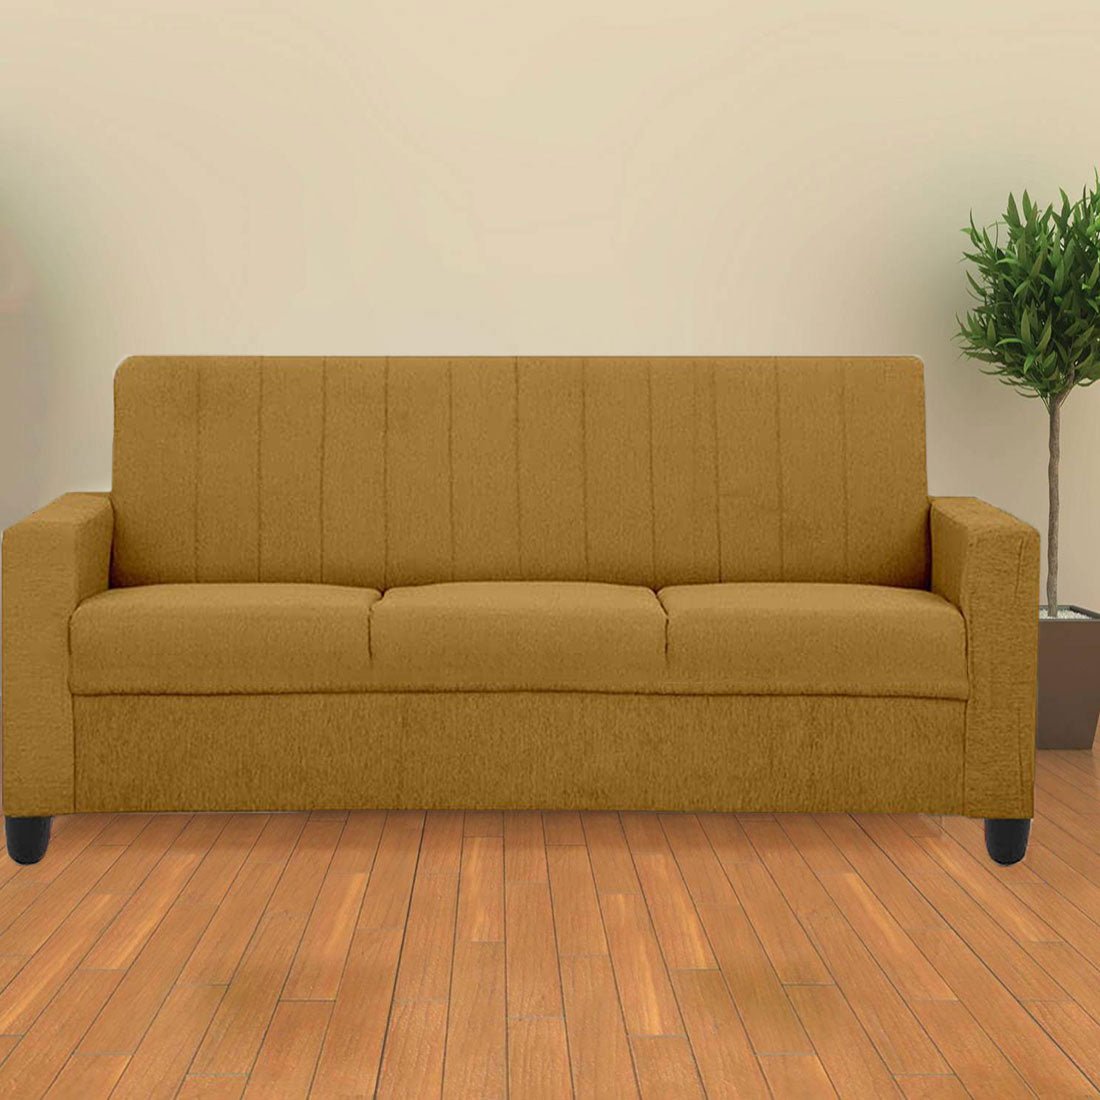 Torque India Nicole 3 Seater Fabric Sofa For Living Room - TorqueIndia